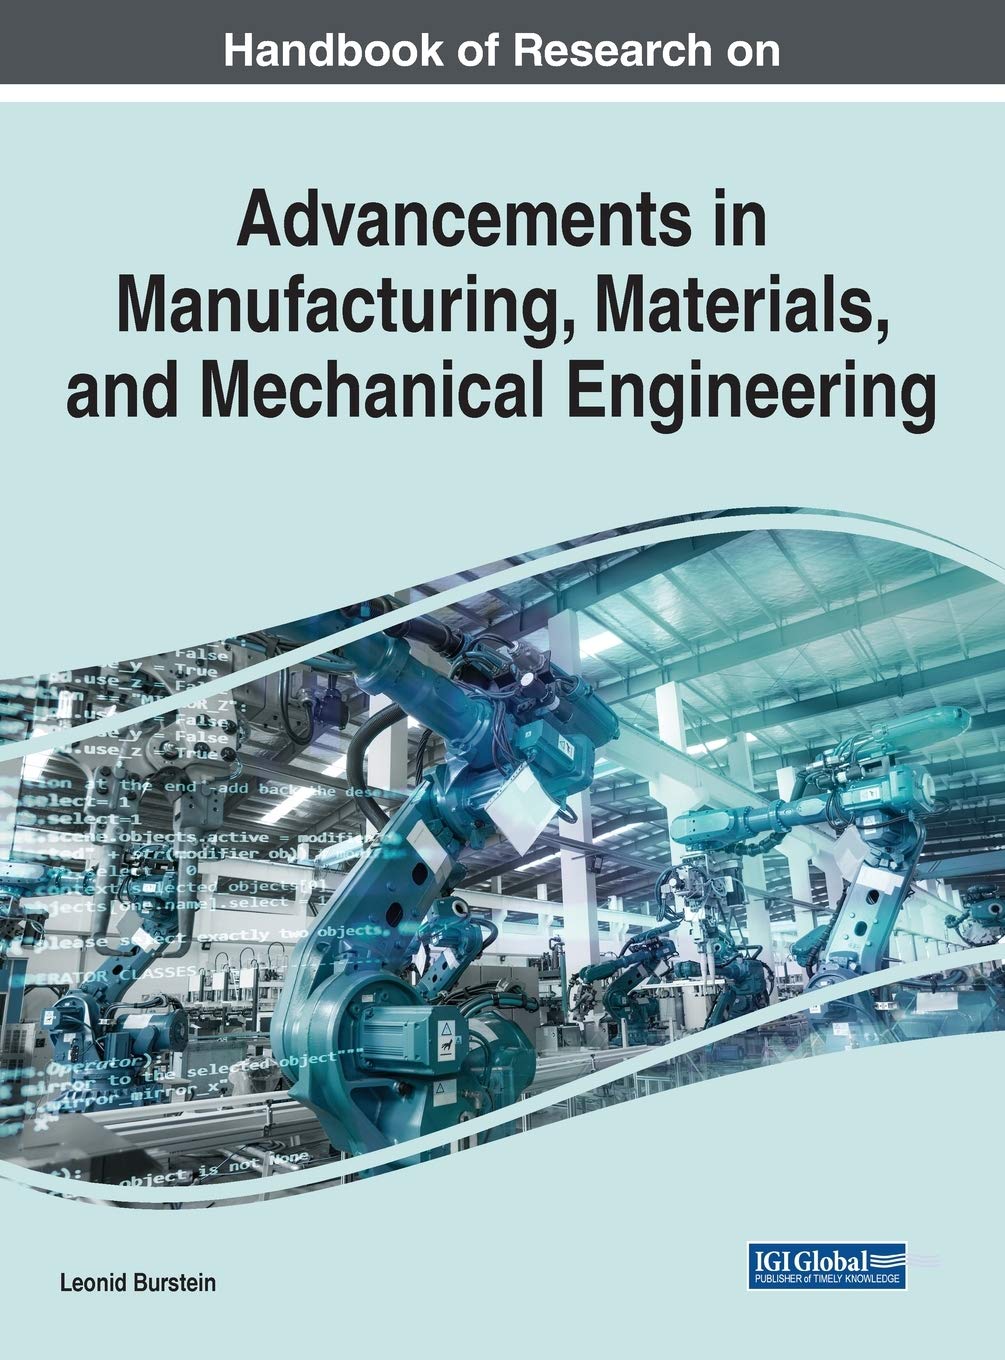 New materials Development. Advancements. Proceeding engineering